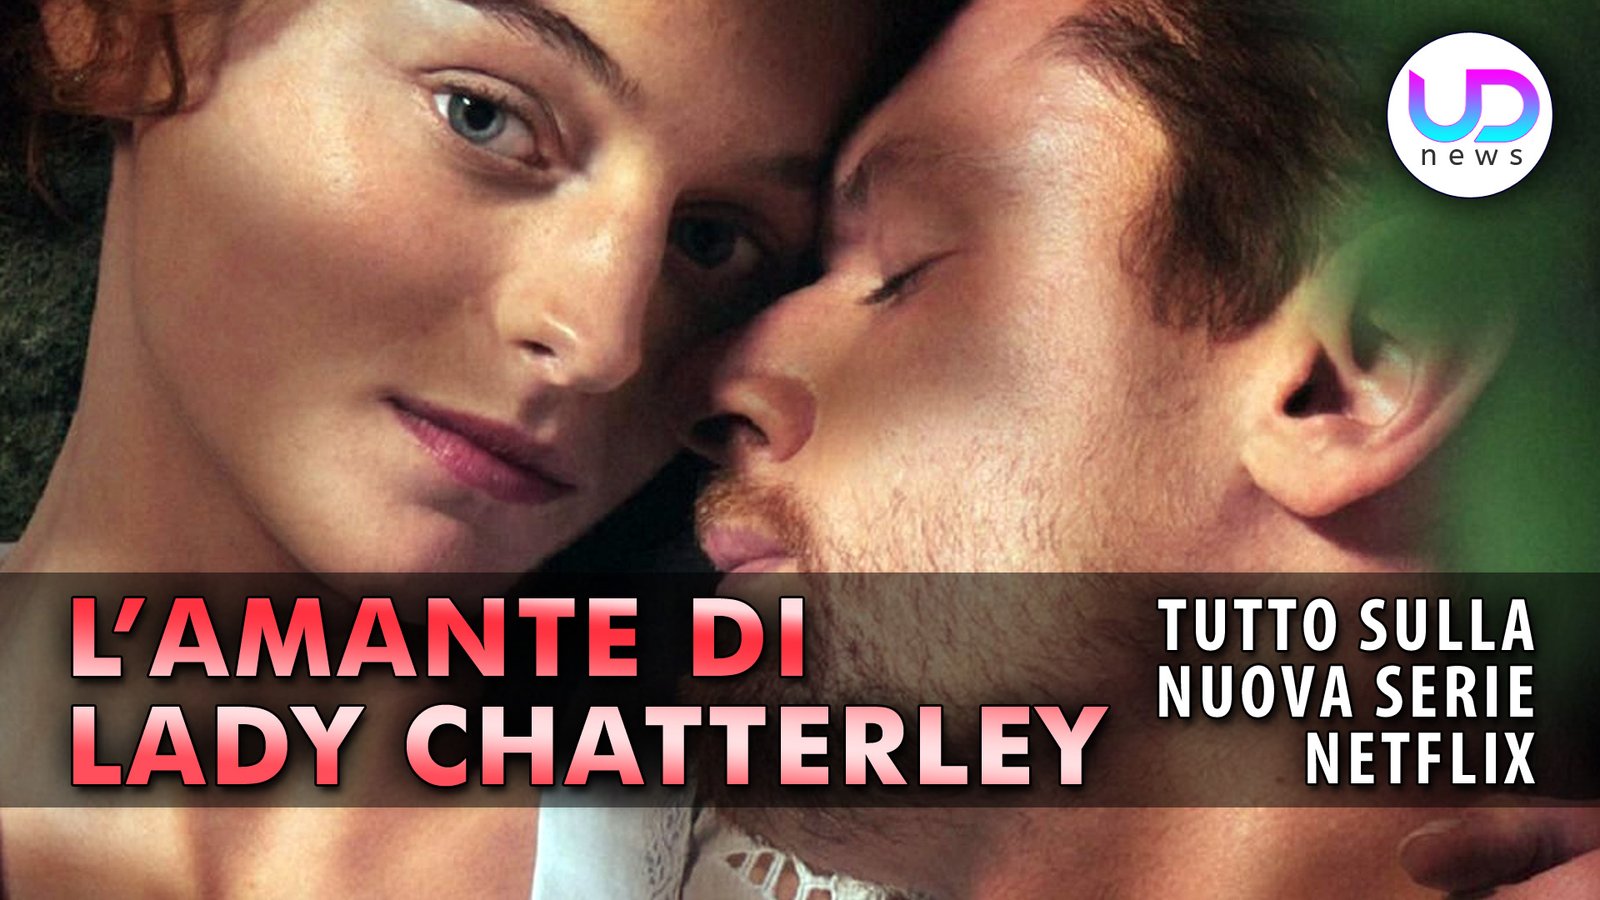 l'amante-di-lady-chatterley:-il-film-netflix-che-racconta-un-amore-scandaloso!-–-ud-news